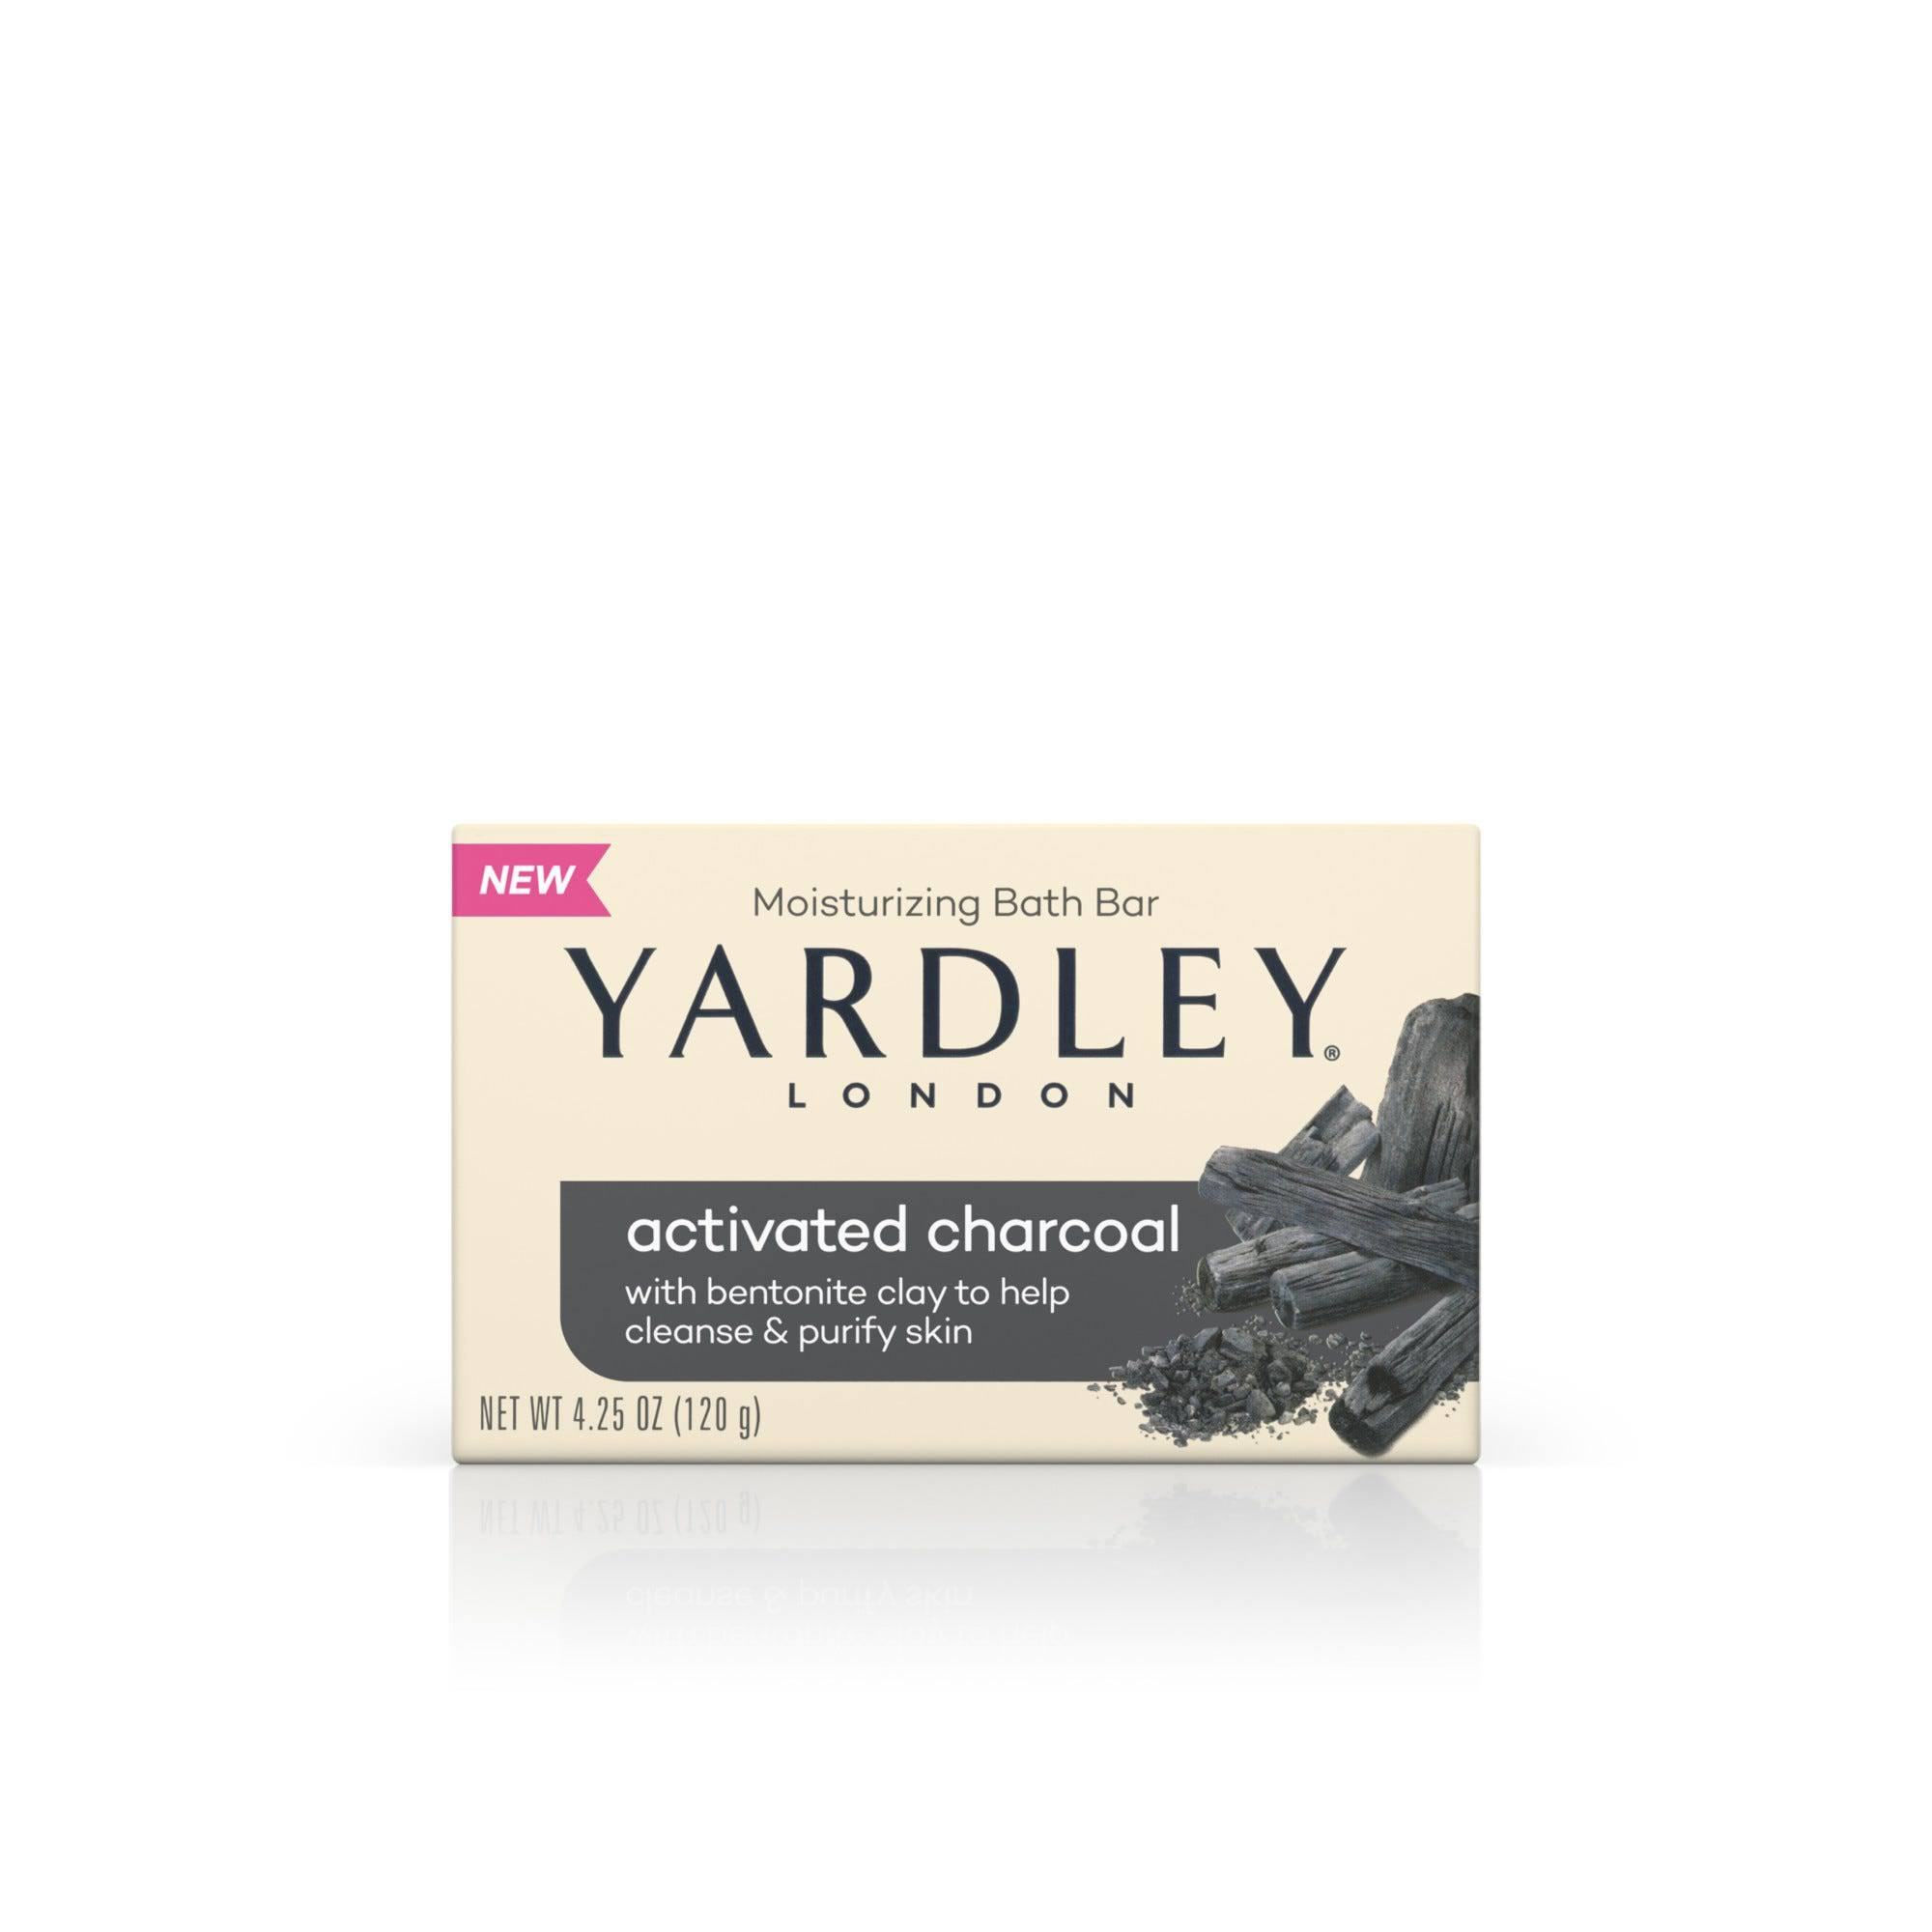 Yardley Activated Charcoal Moisturizing Bath Bar - 4.25oz